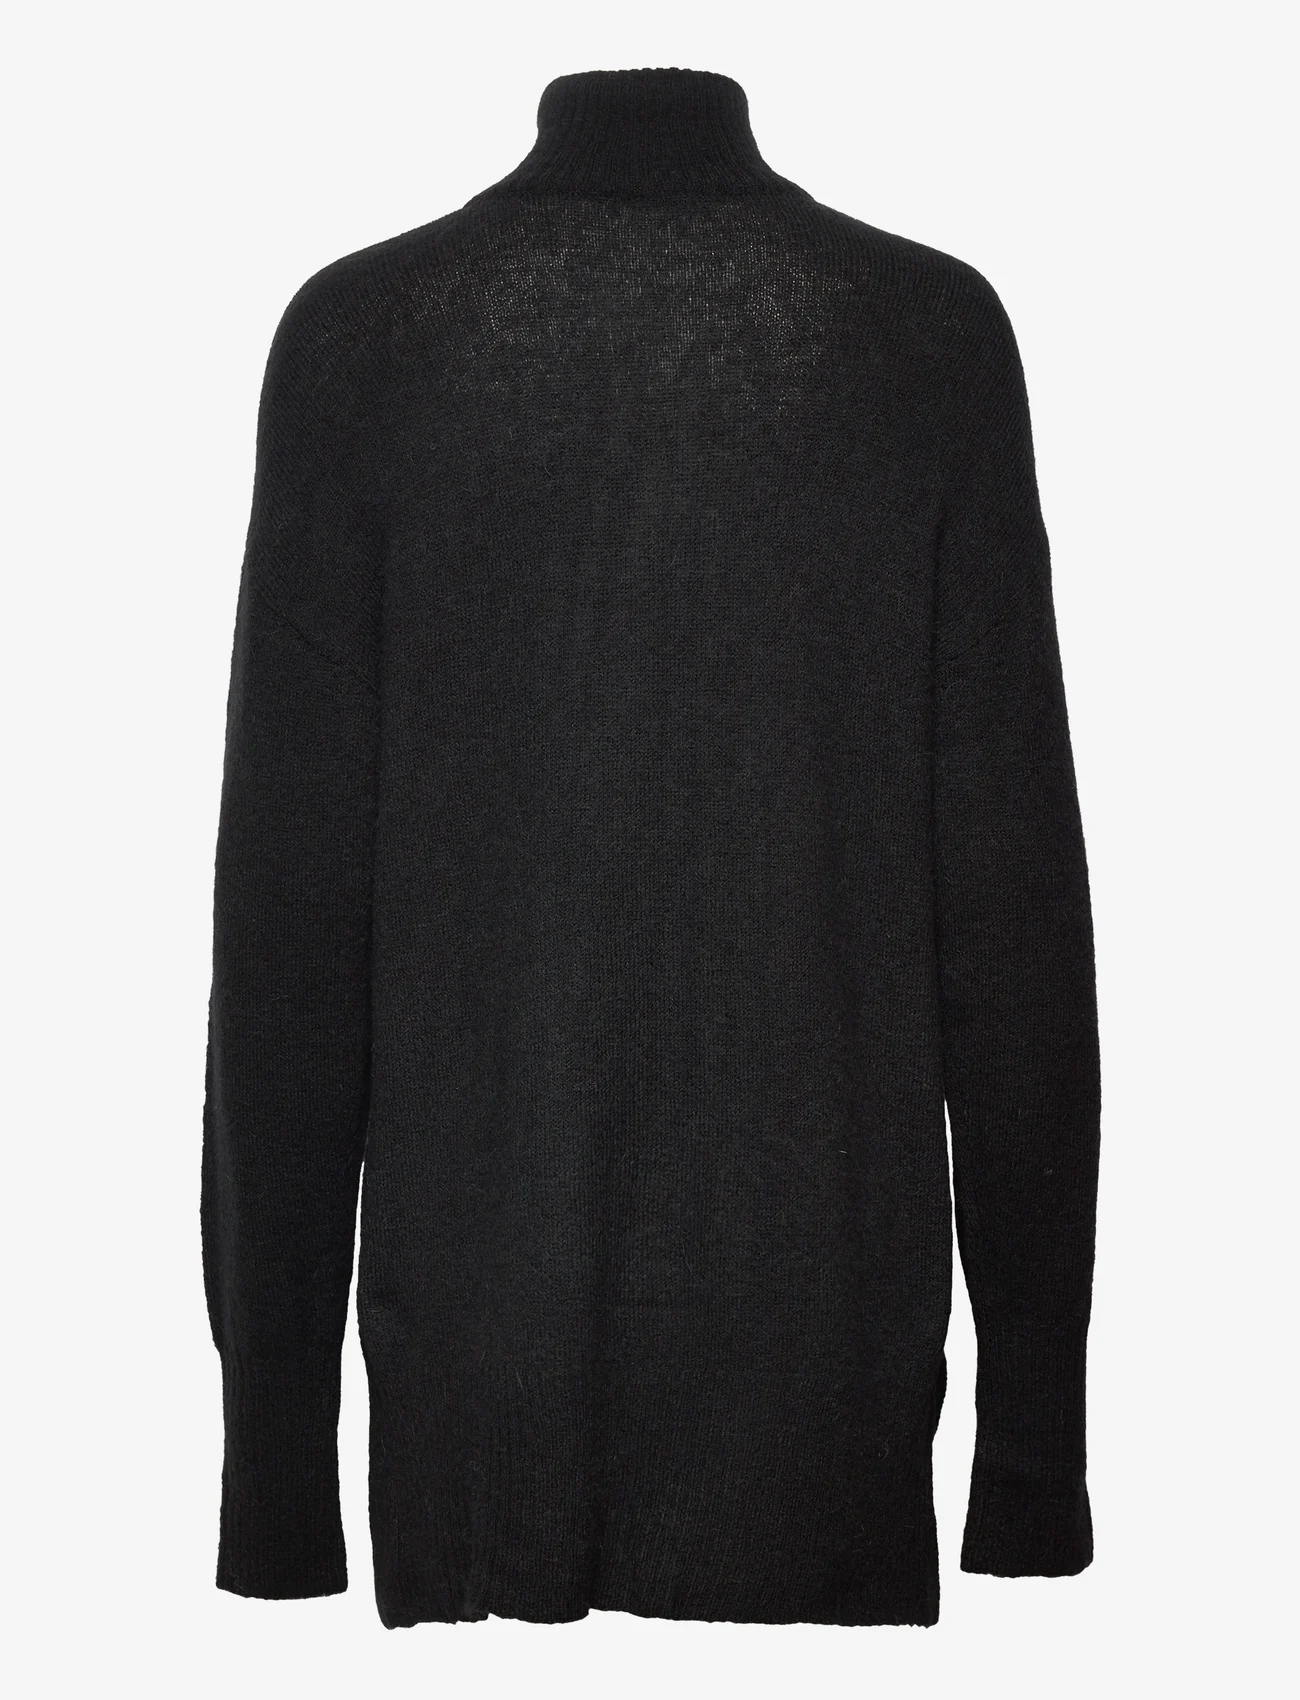 Culture - CUzidsel Zipper Pullover - megztiniai su aukšta apykakle - black - 1